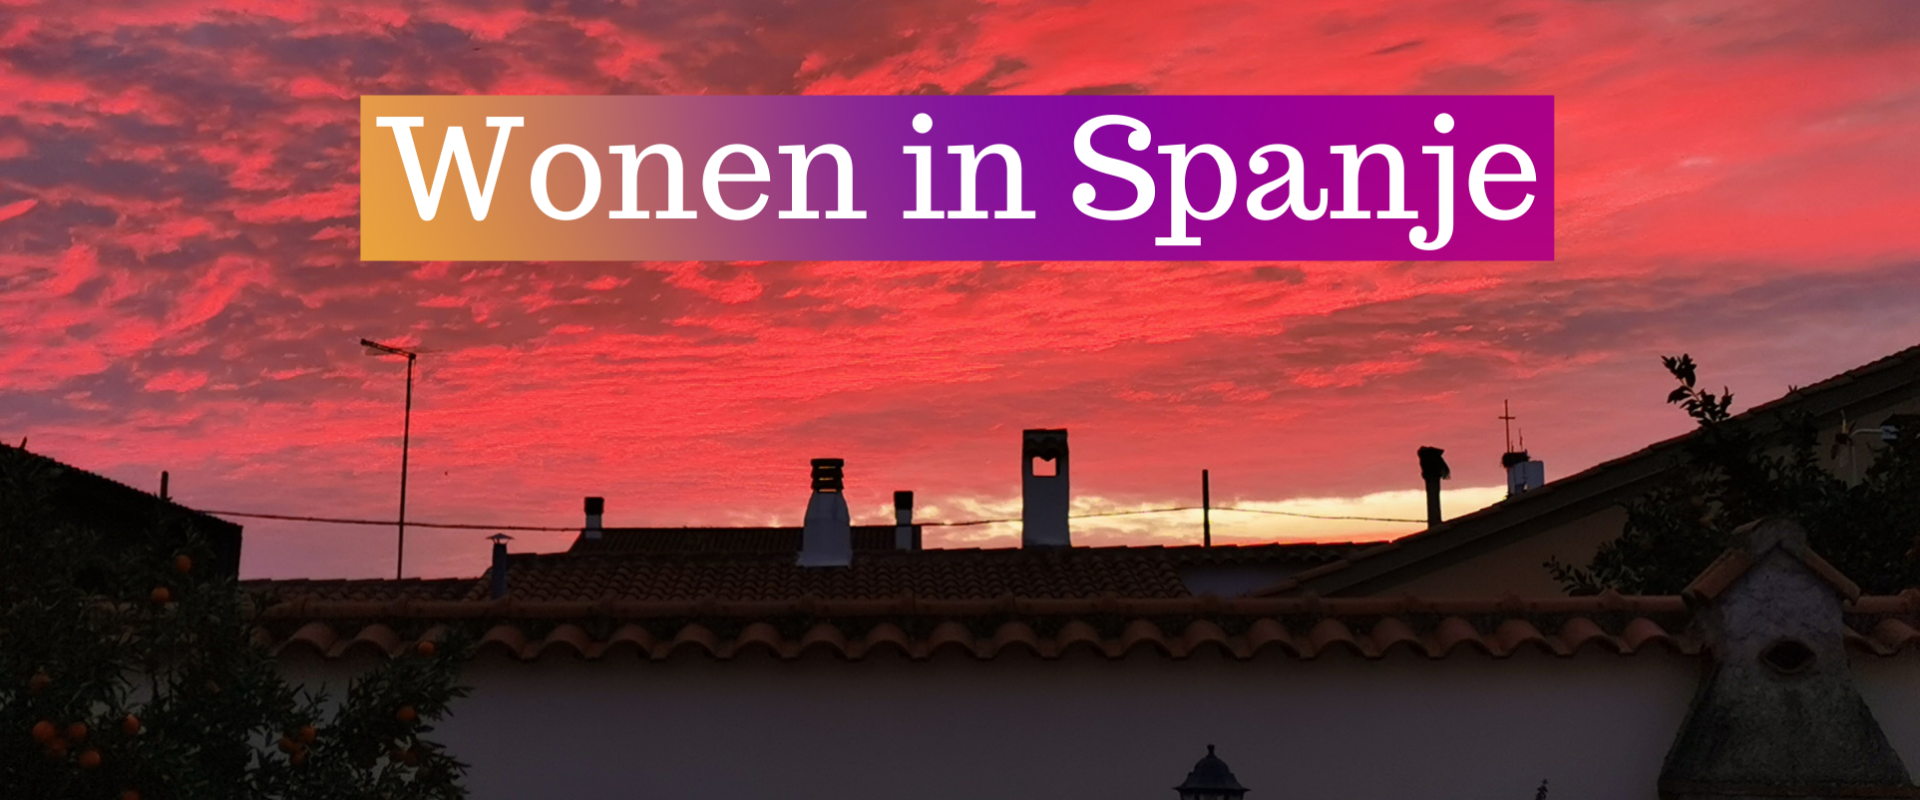 Wonen in Spanje en de Spaanse vriendelijkheid - deel 2